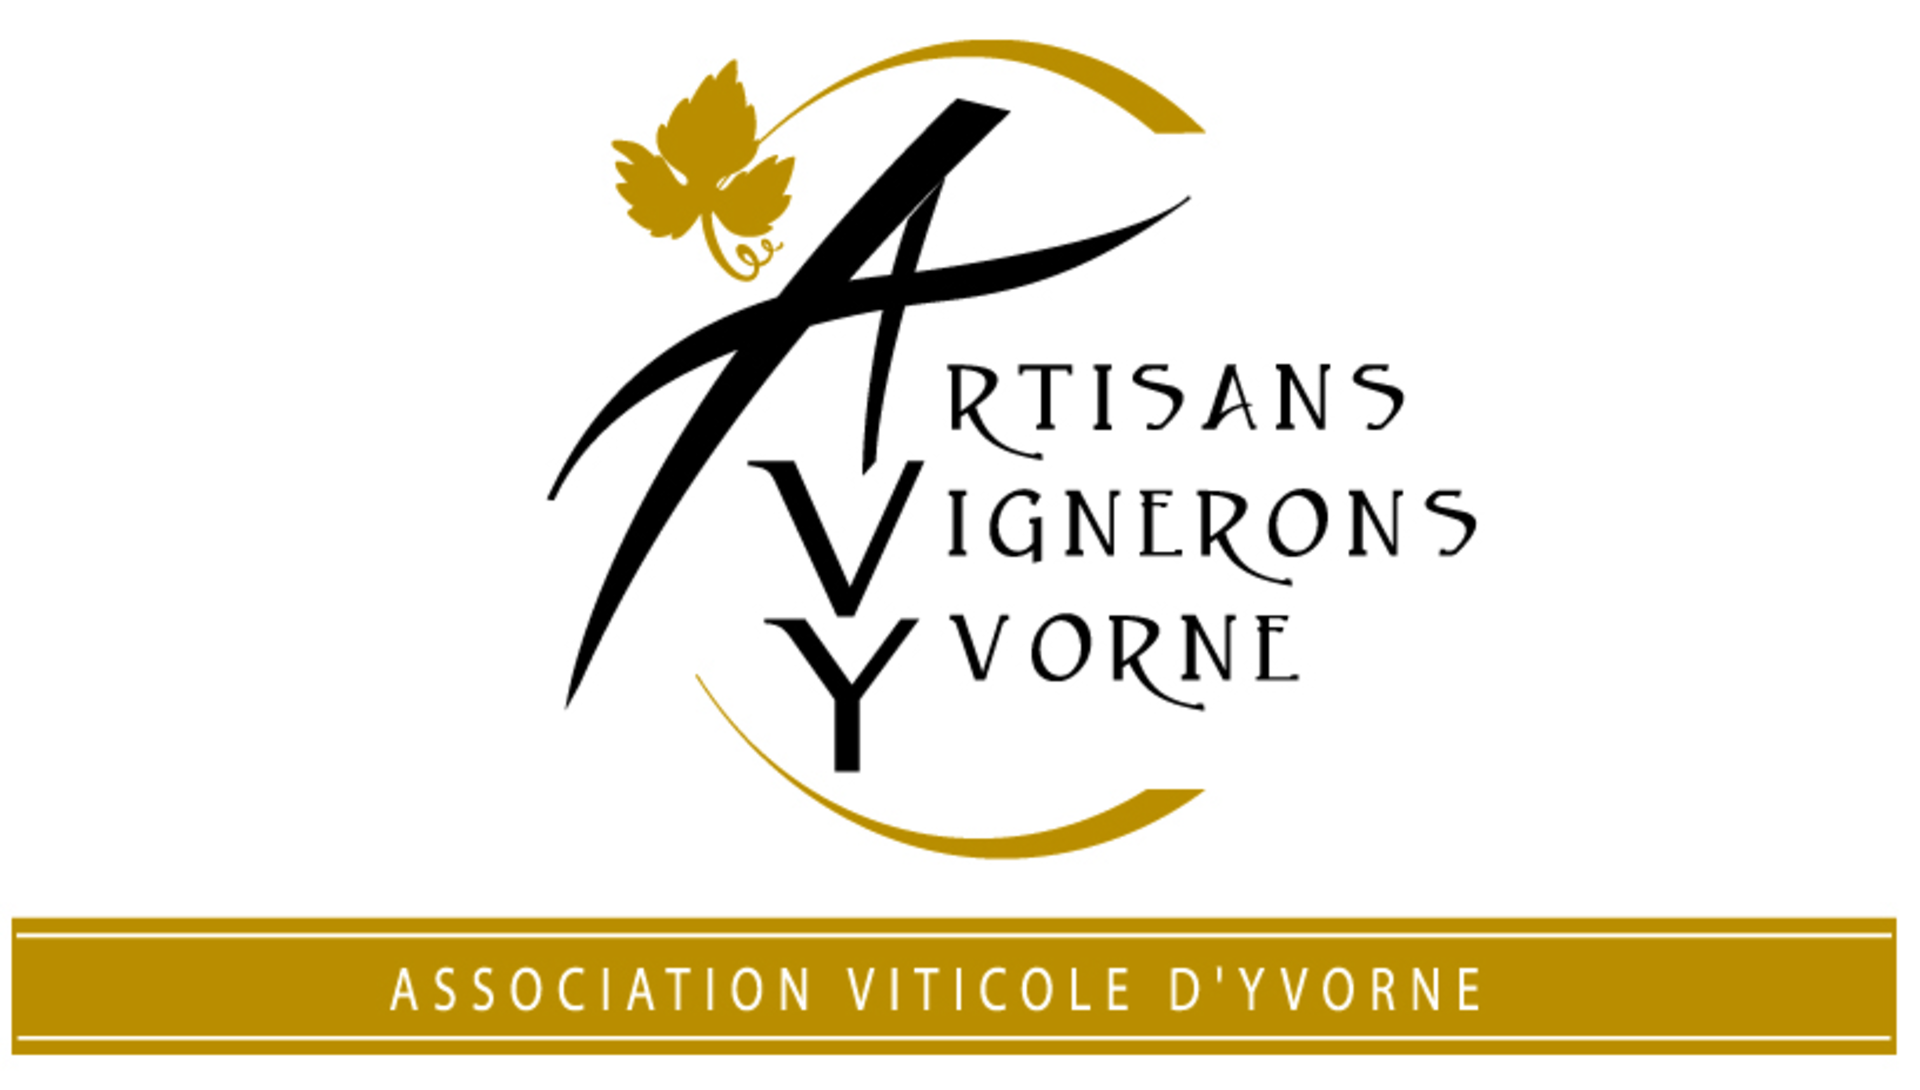 Association viticole d'Yvorne